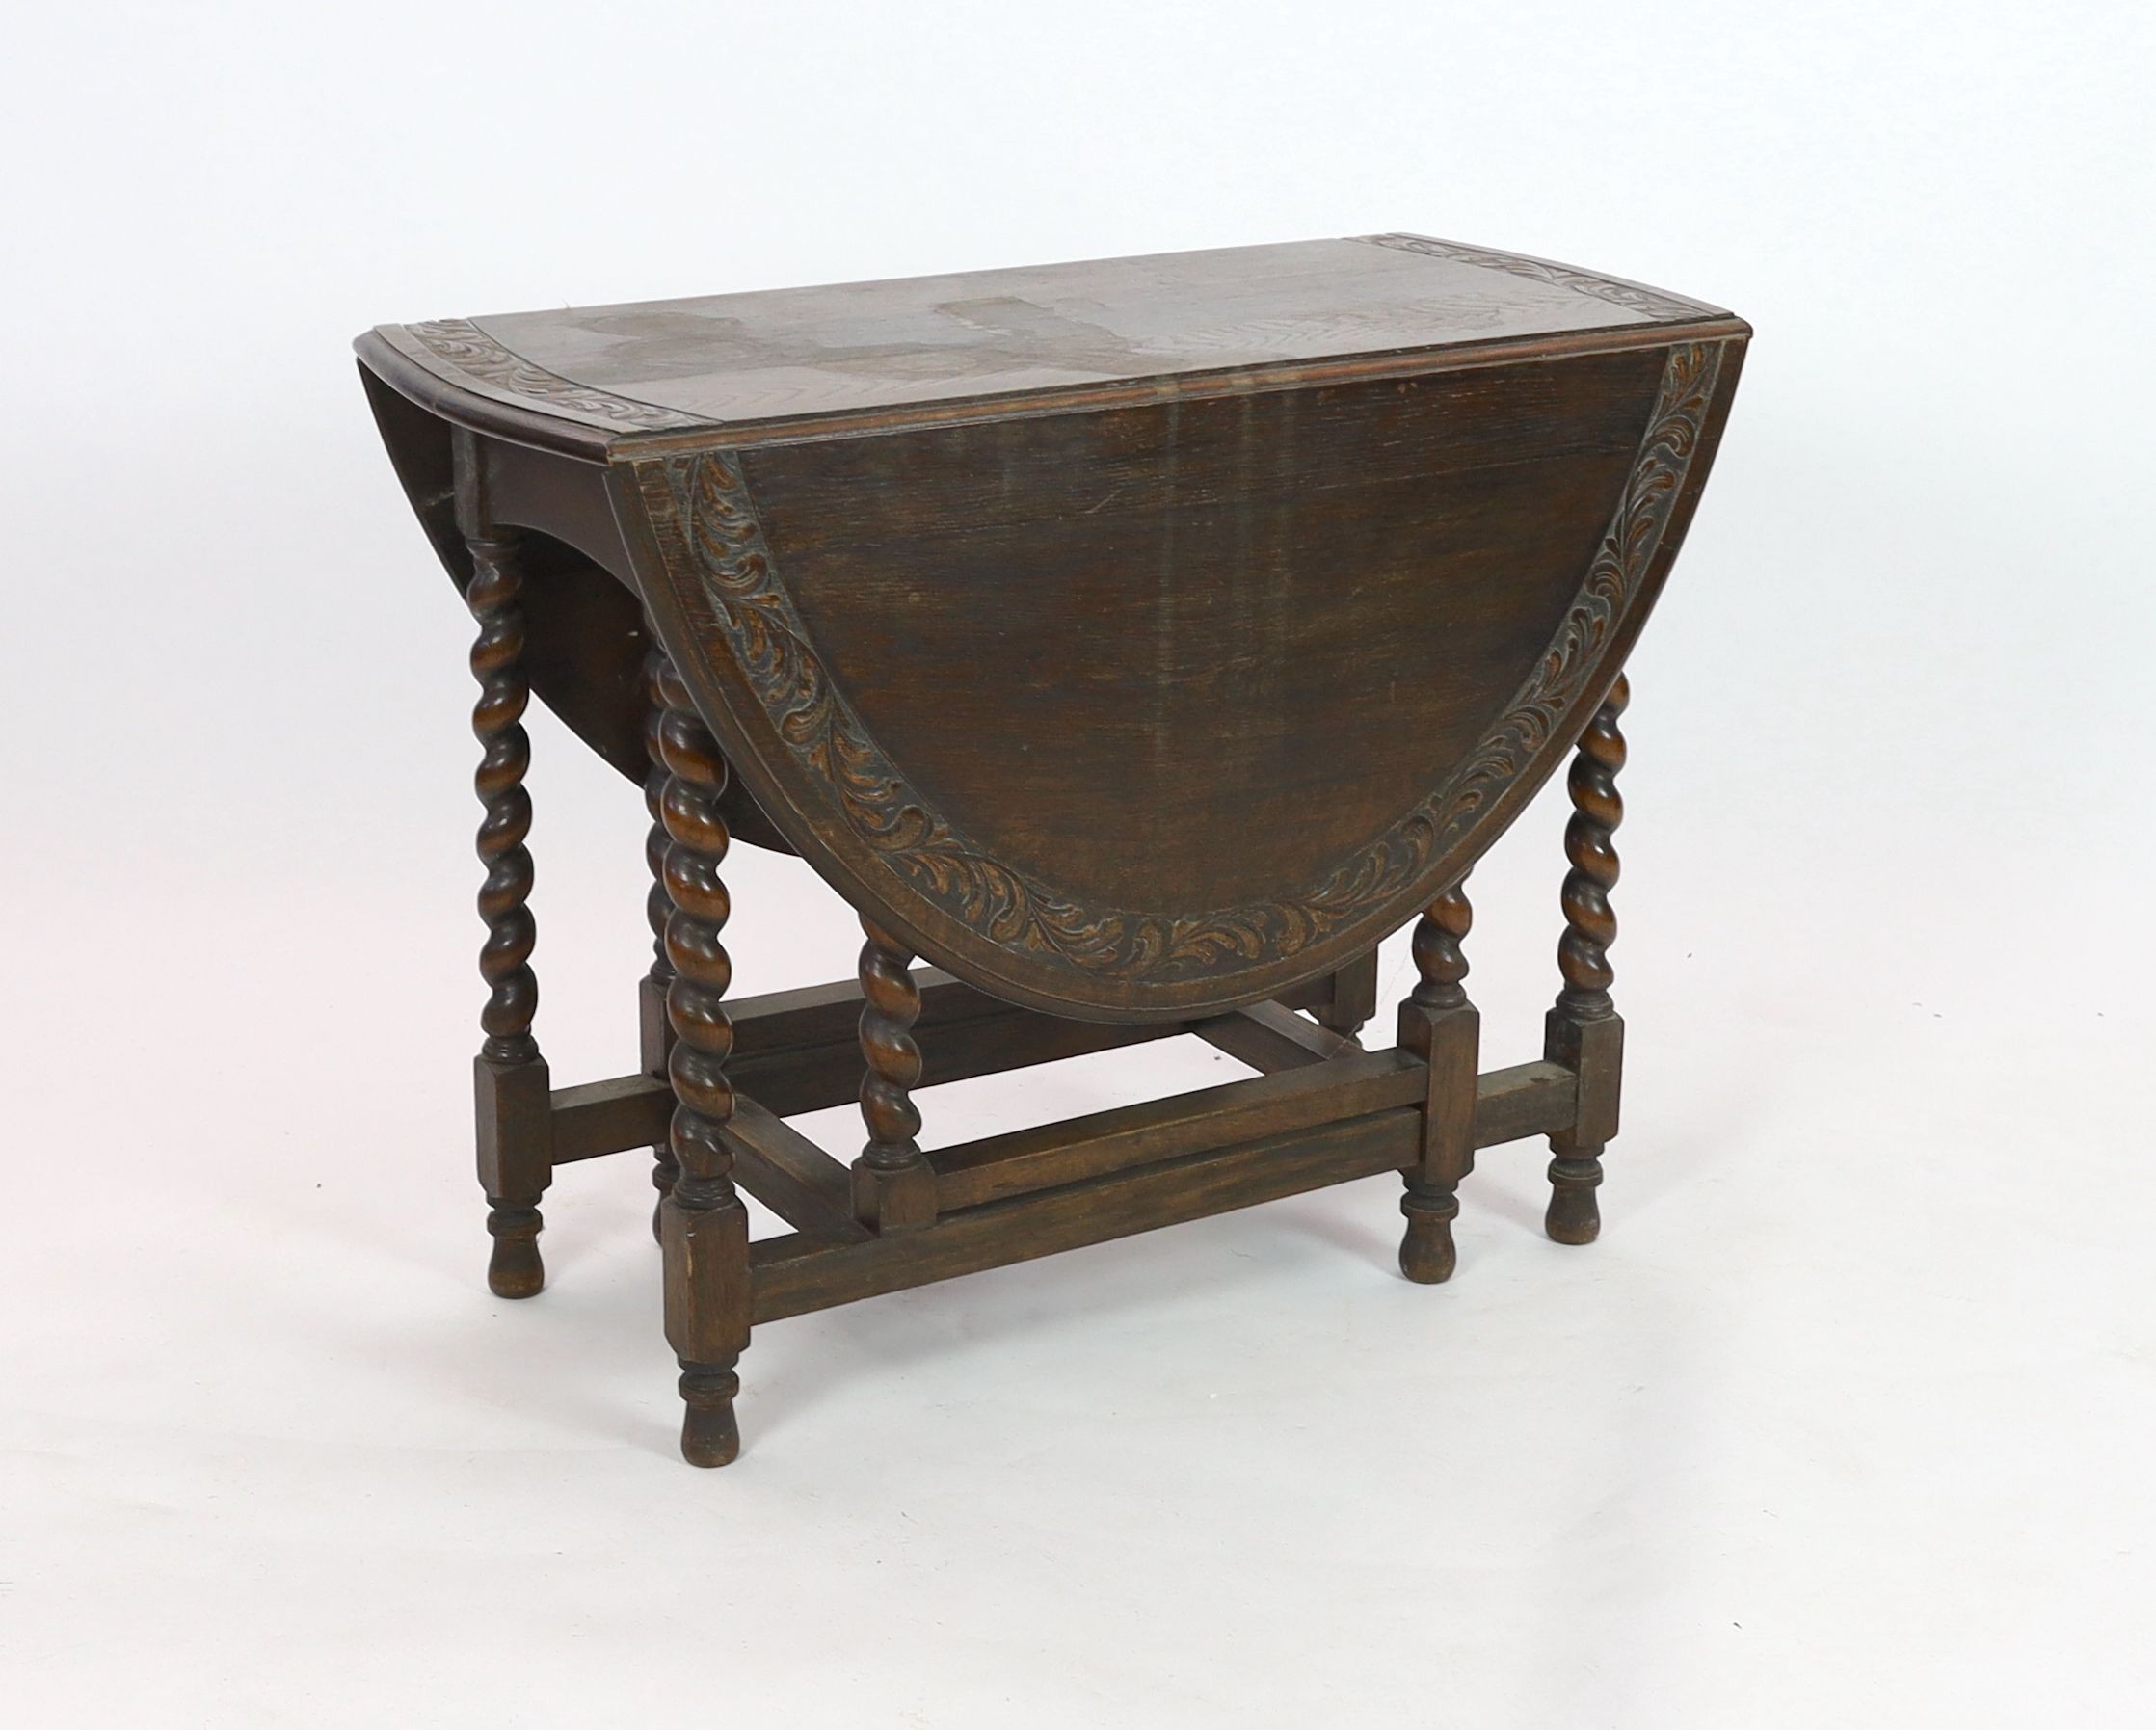 An early 20th century 18th century style oak gateleg dining table, width 98cm depth 46cm height 76cm